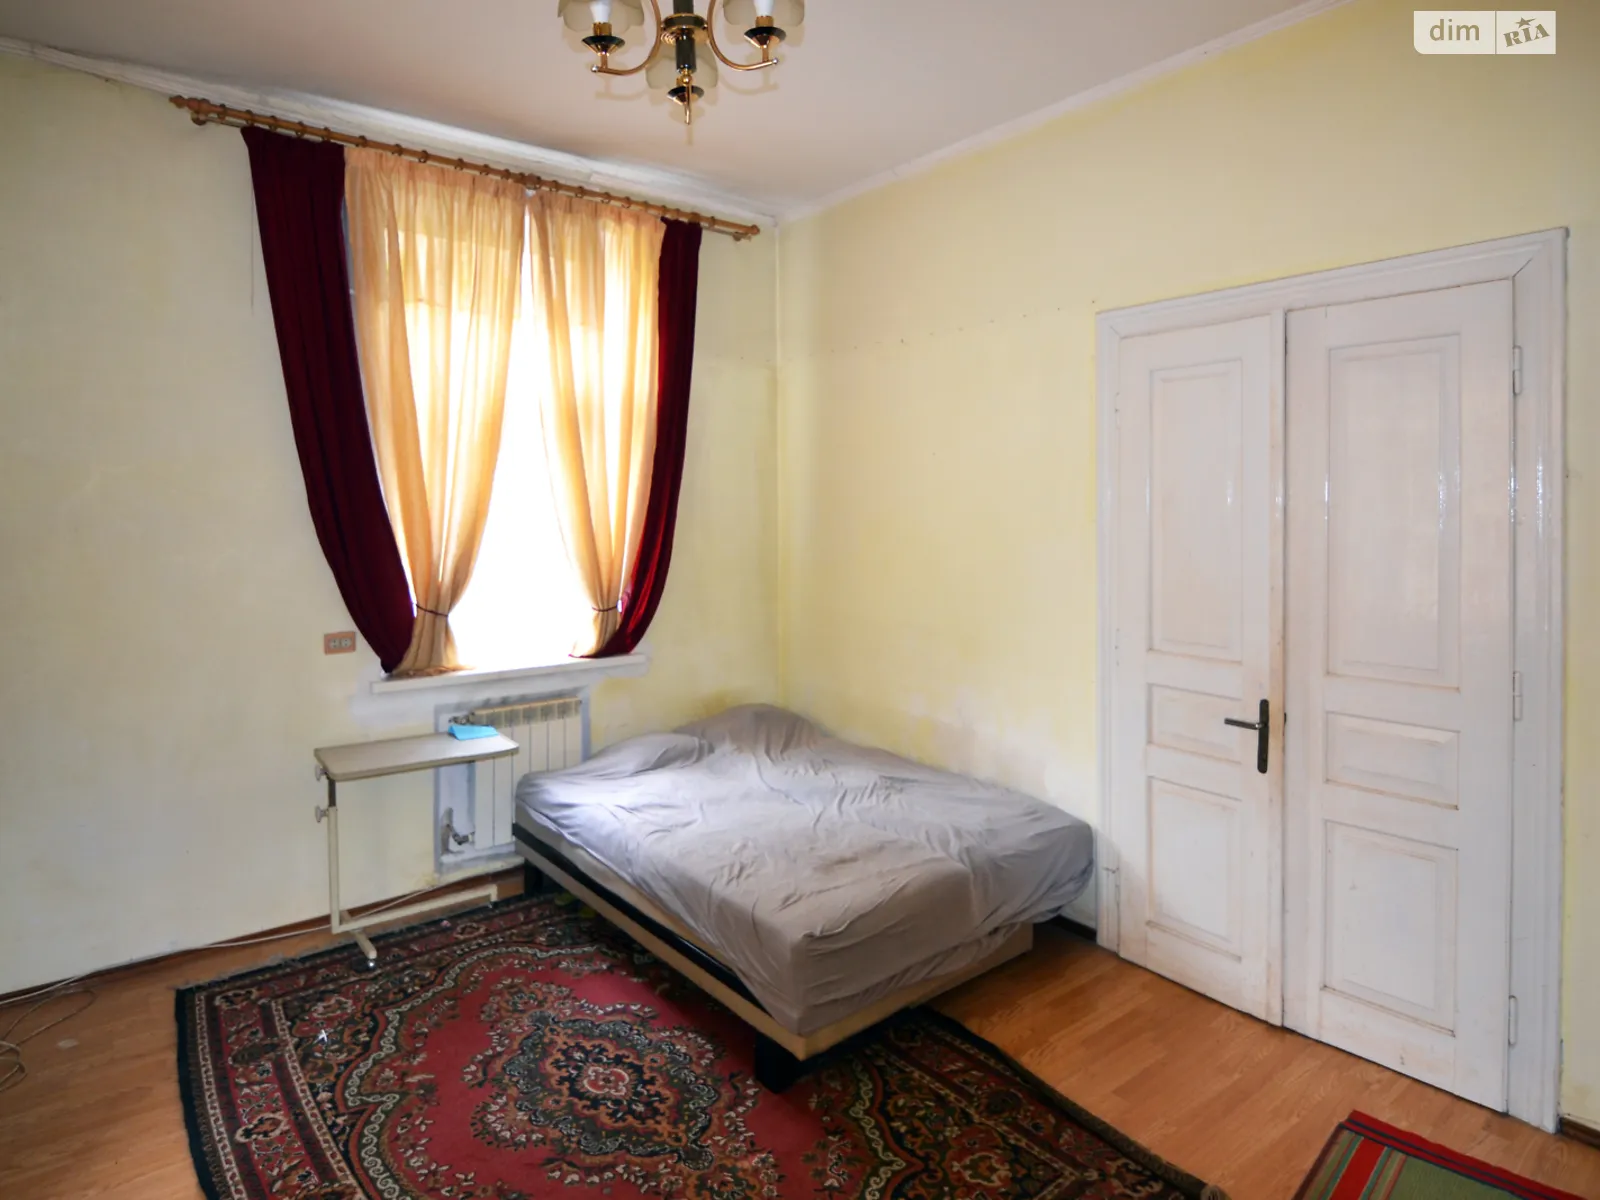 Продается 2-комнатная квартира 59.4 кв. м в Ивано-Франковске - фото 3